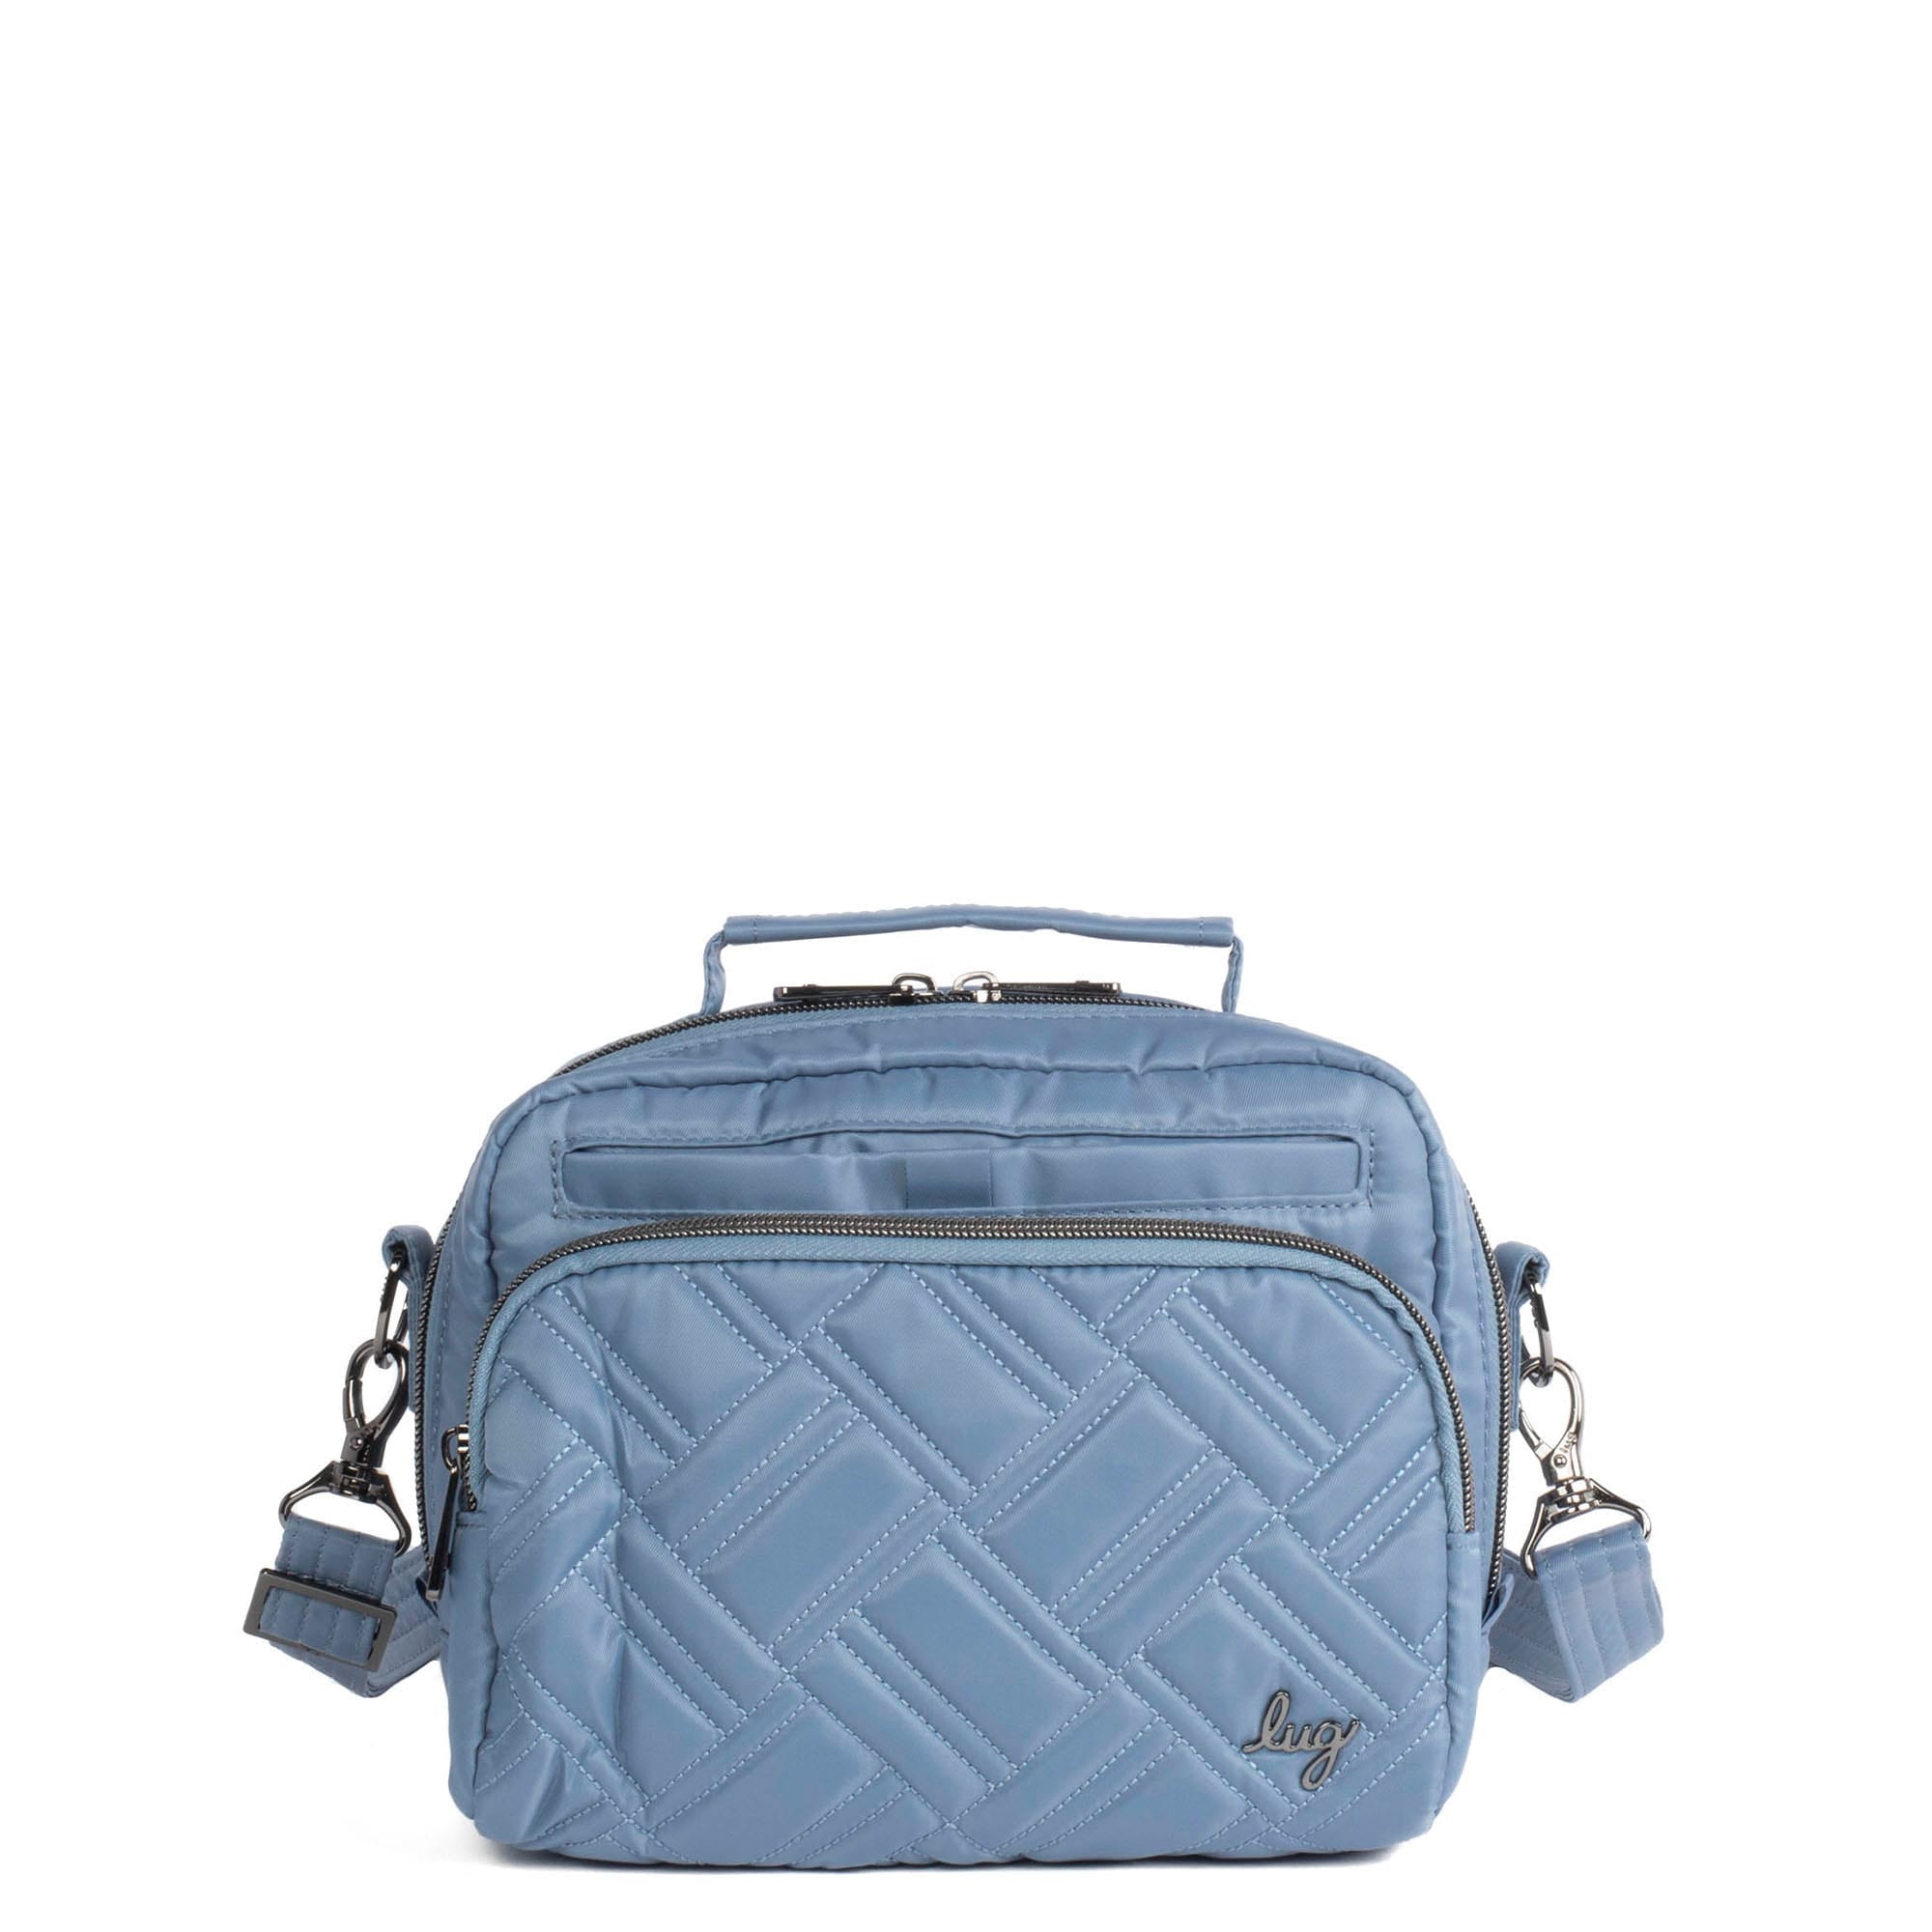 Lug Carousel Xl, Kelly Green: Handbags